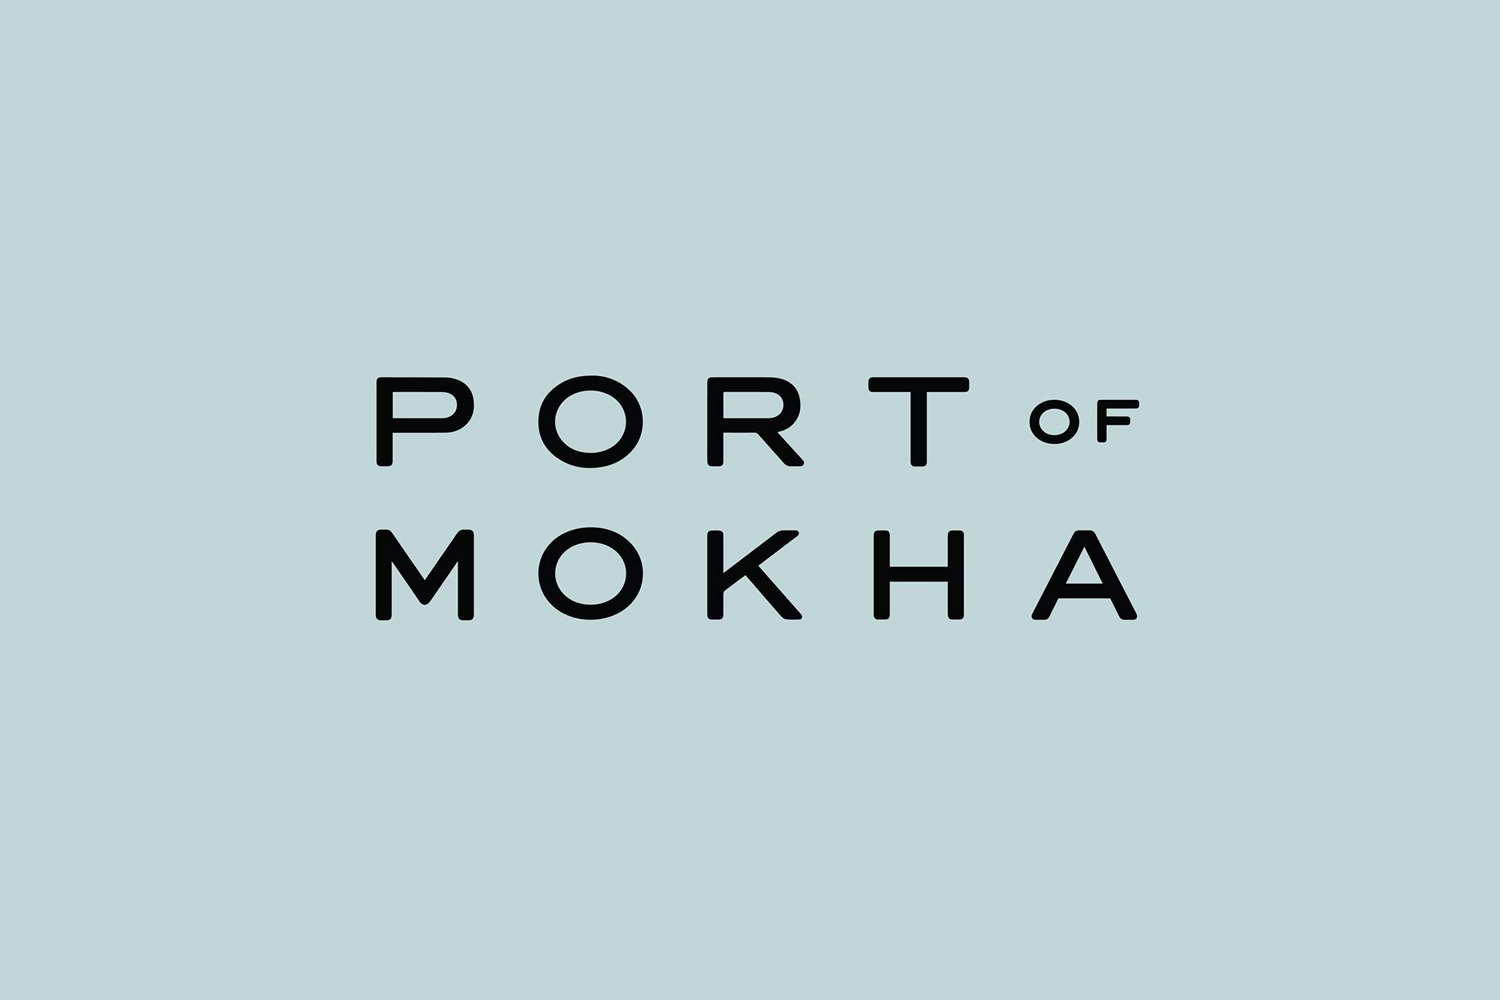 Creative Logotype Gallery & Inspiration: Port of Mokha by Manual, United States